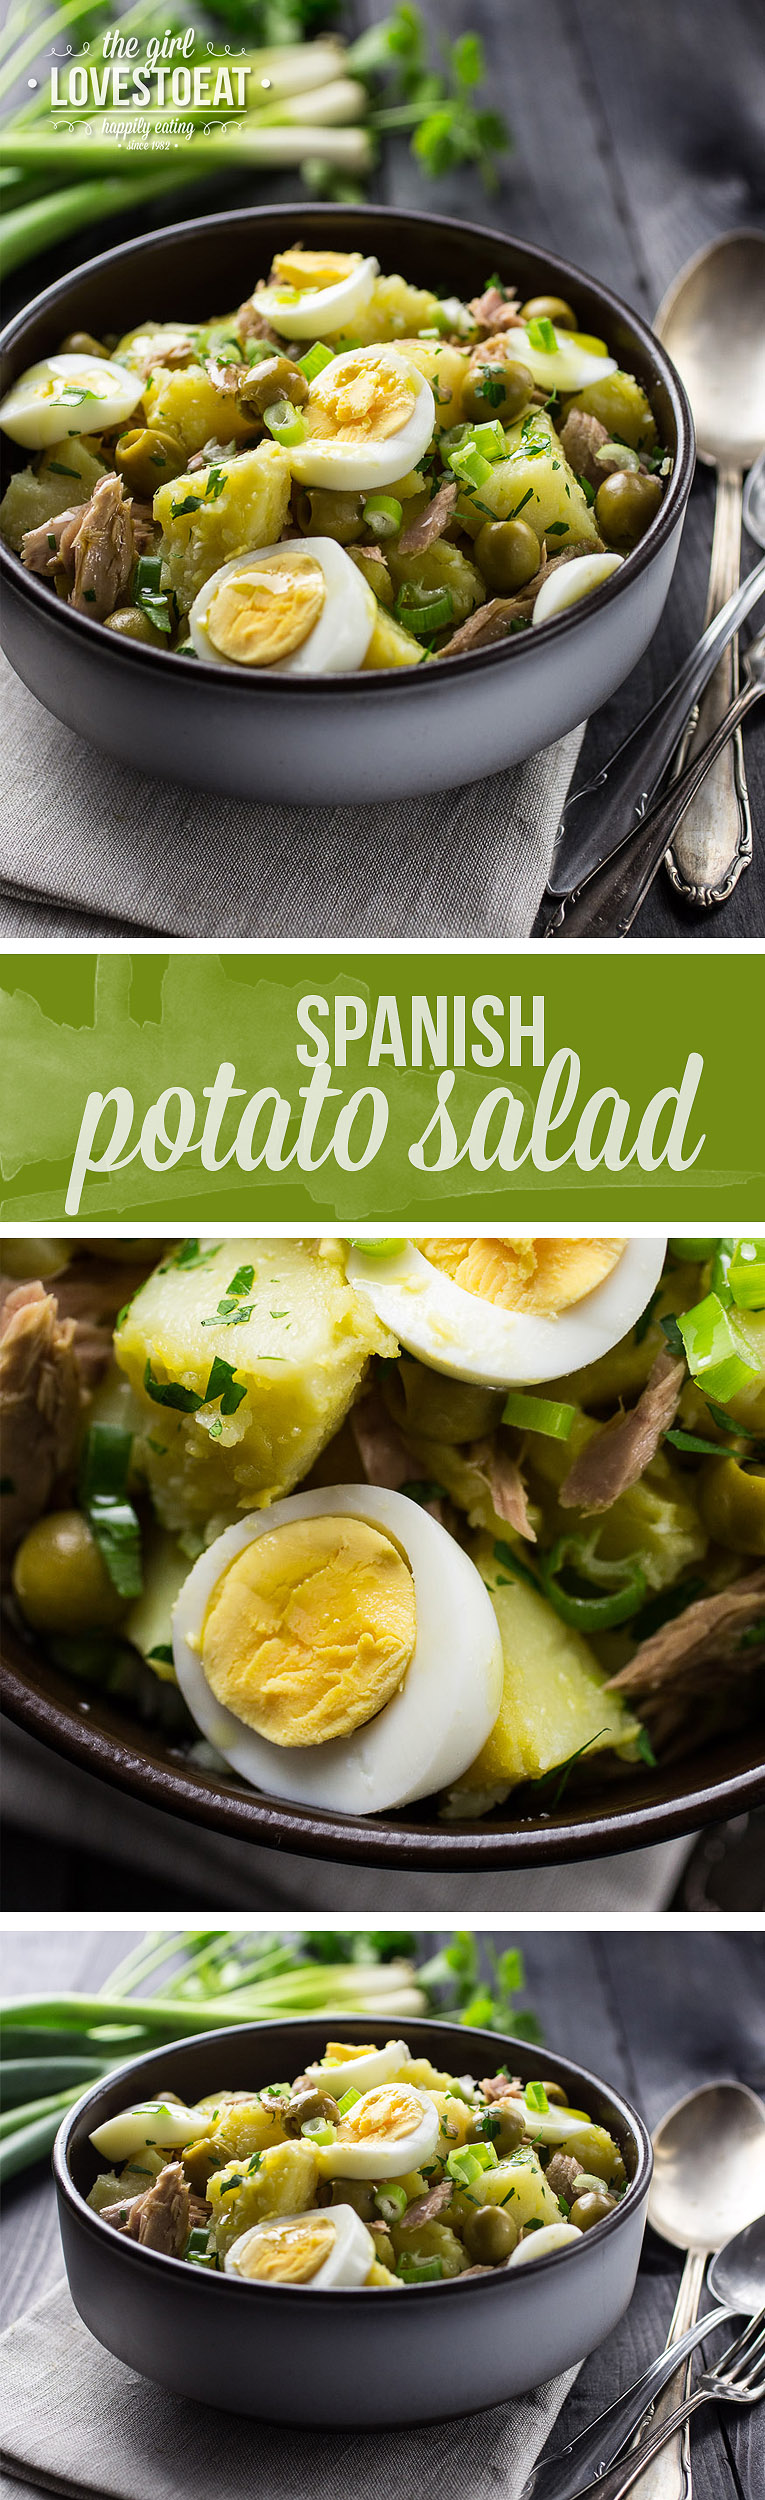 Spanish Potato Salad { thegirllovestoeat.com }